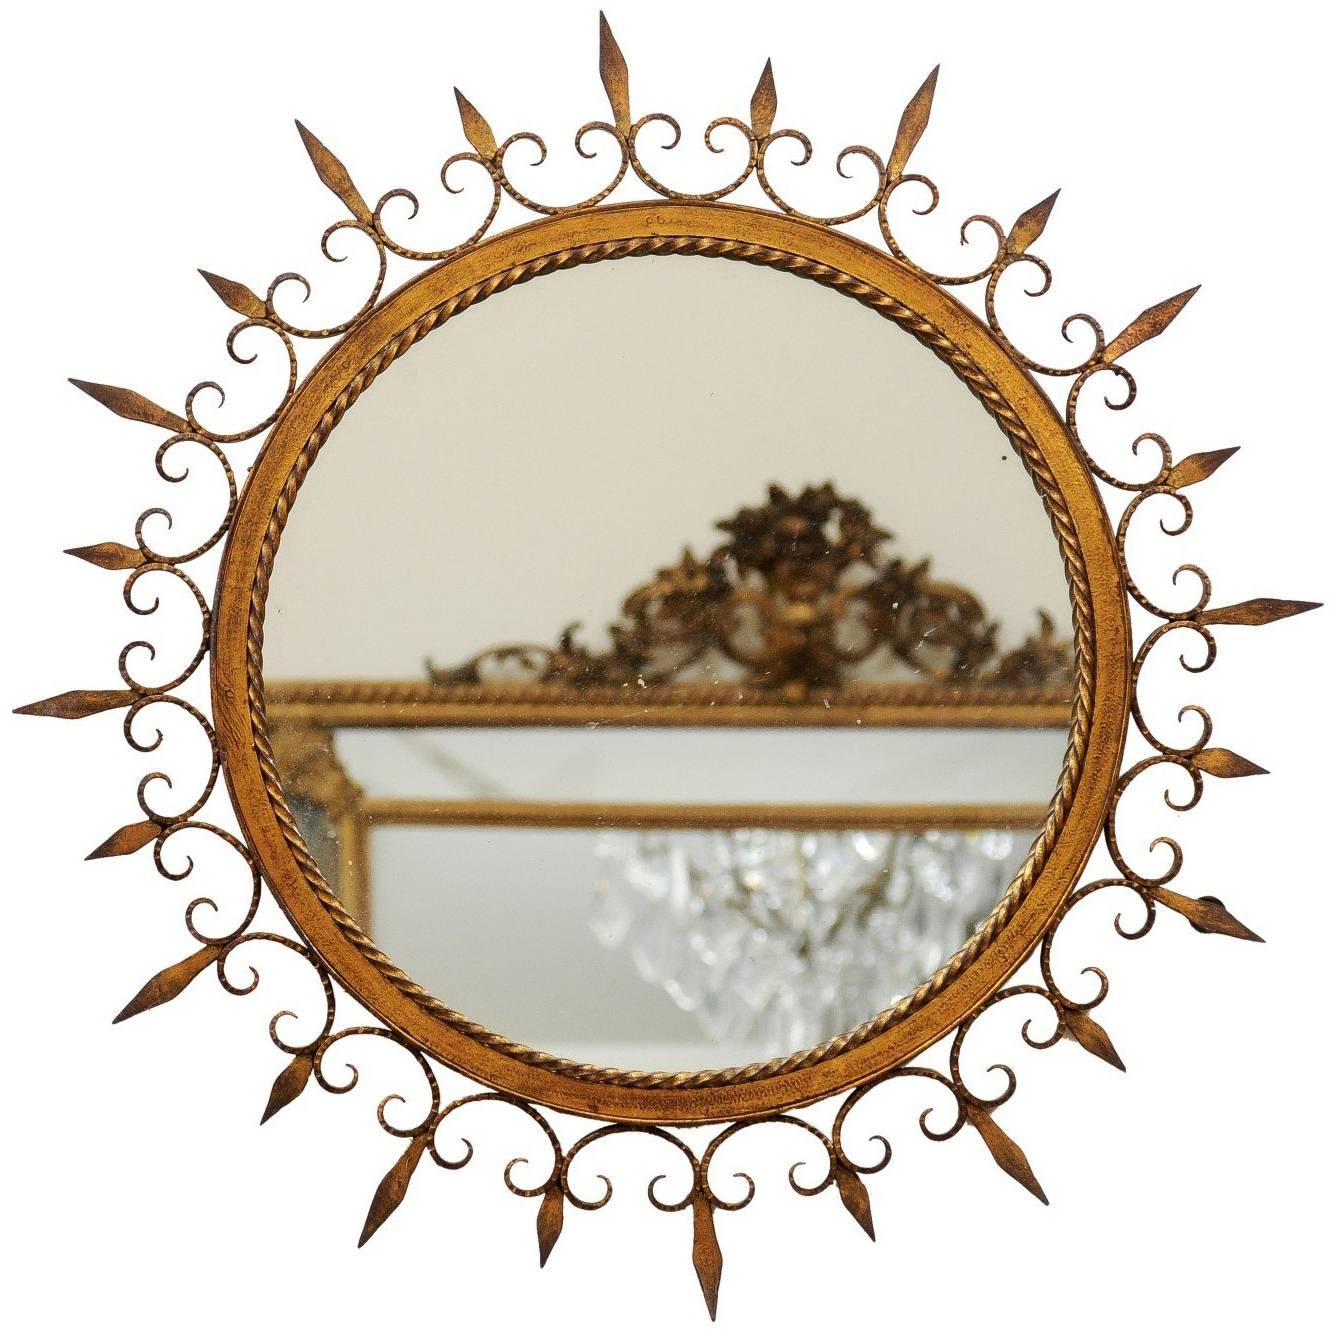 French Gilded Forged Iron Sunburst Mirror with Stylized Fleurs-de-Lys Motifs